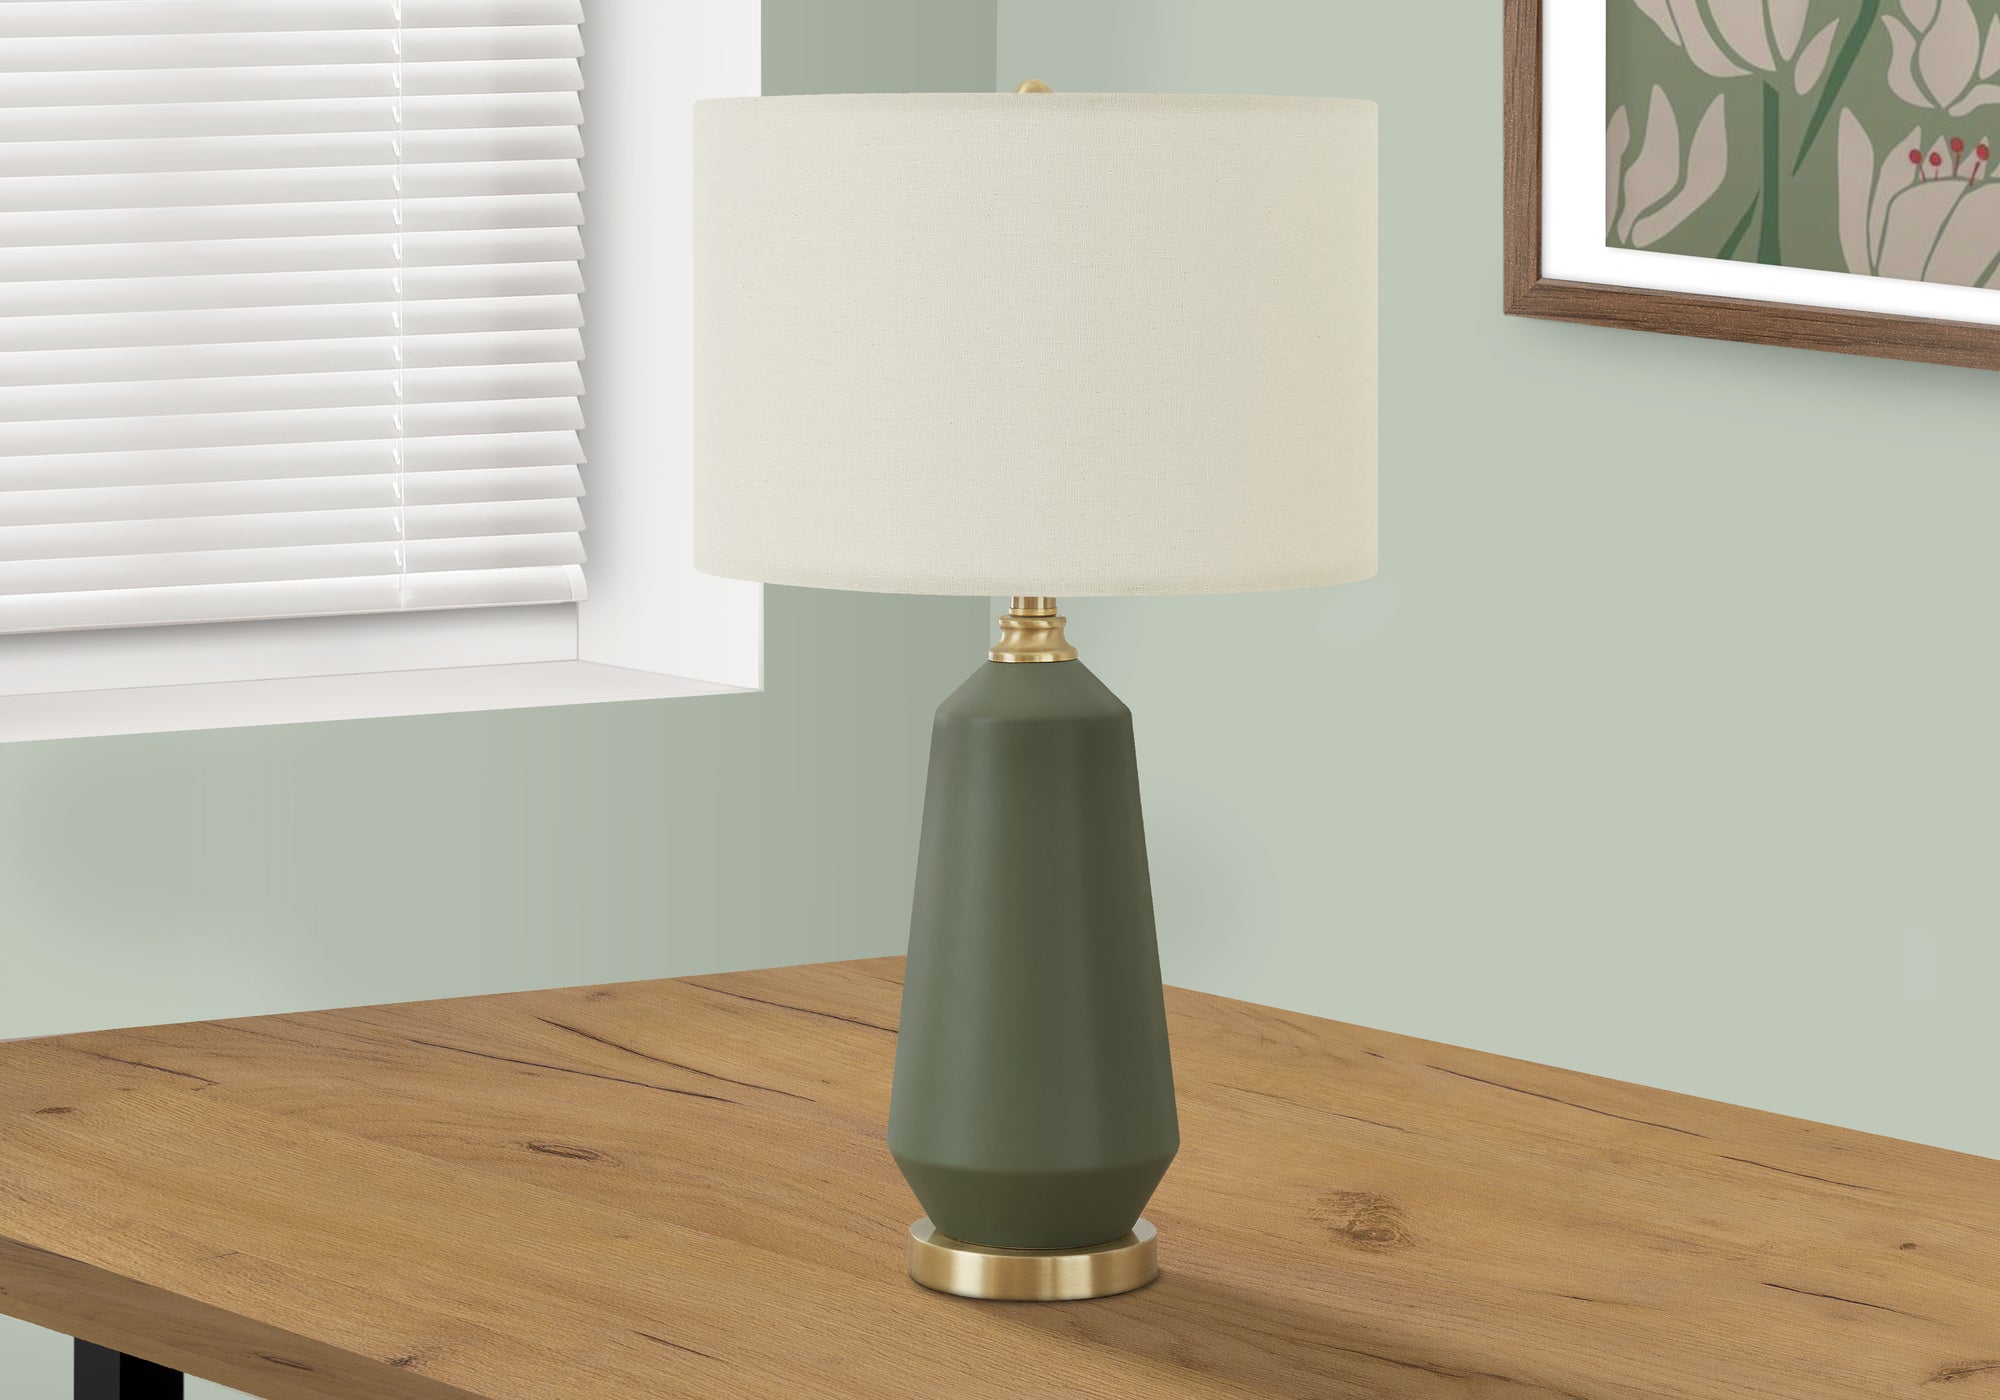 MN-979624    Lighting, 26"H, Table Lamp, Green Ceramic, Ivory / Cream Shade, Contemporary